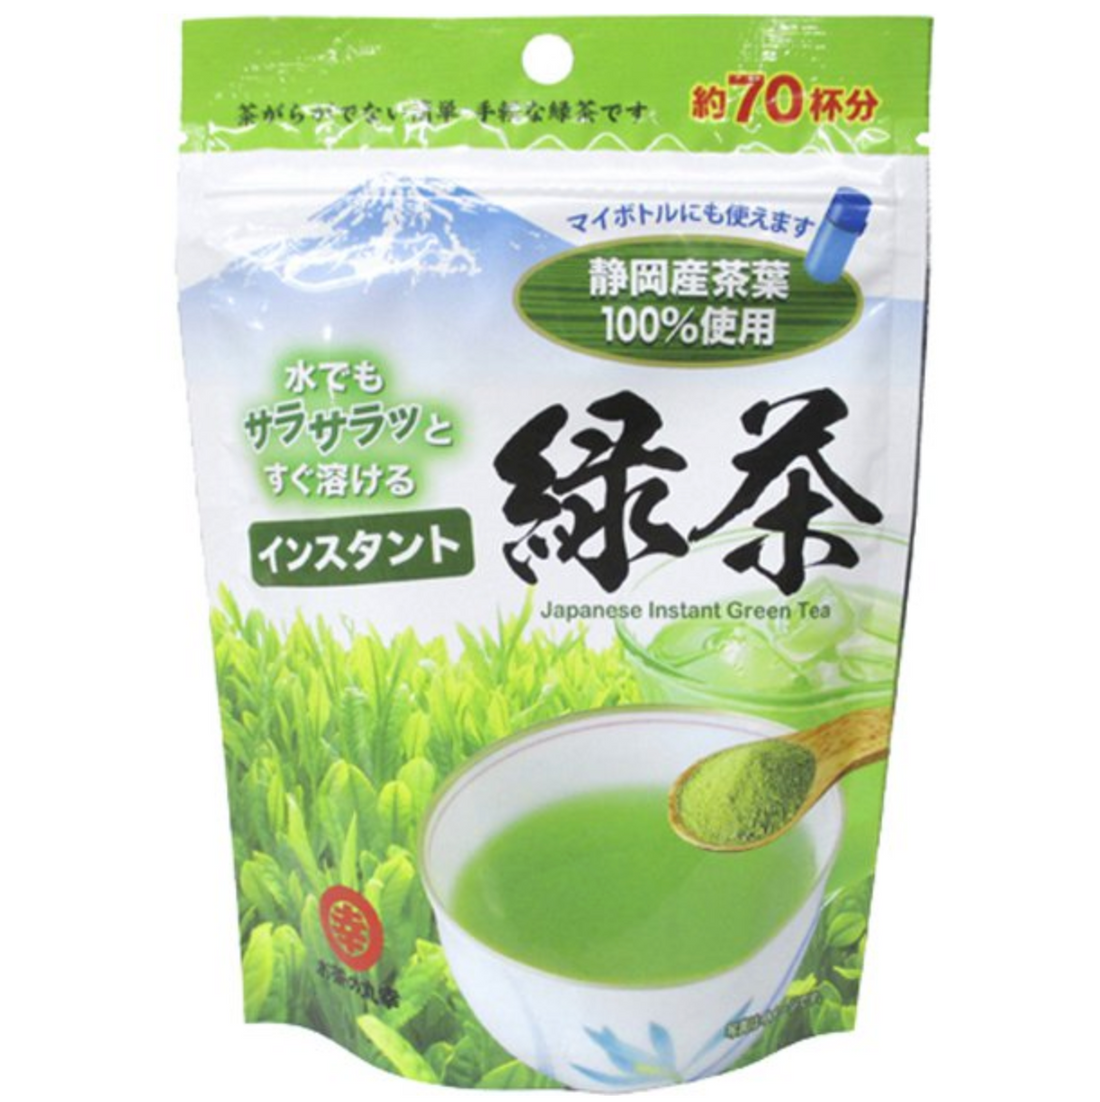 Ochanomaruko Shizuoka prefecture instant green tea 50g